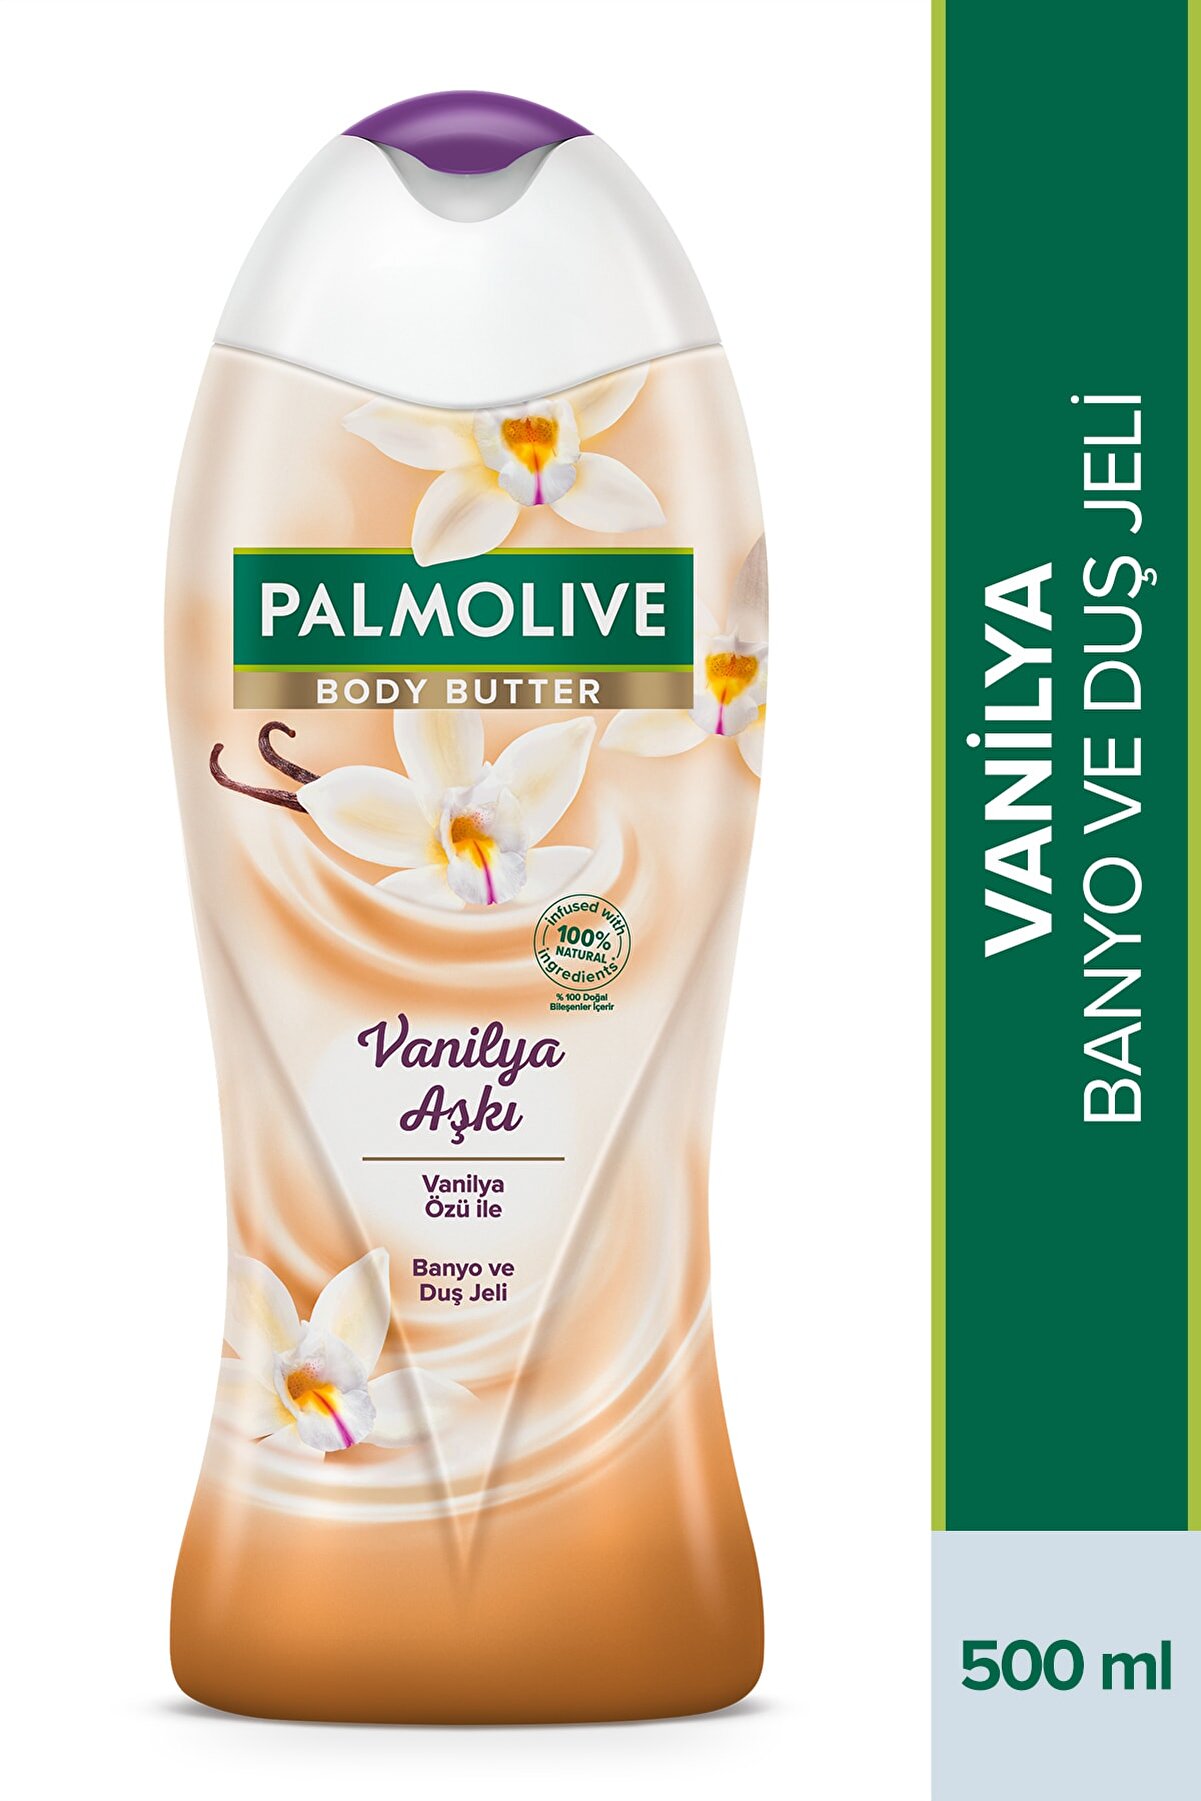 Palmolive Body Butter Vanilya Aşkı Banyo Ve Duş Jeli 500 ml